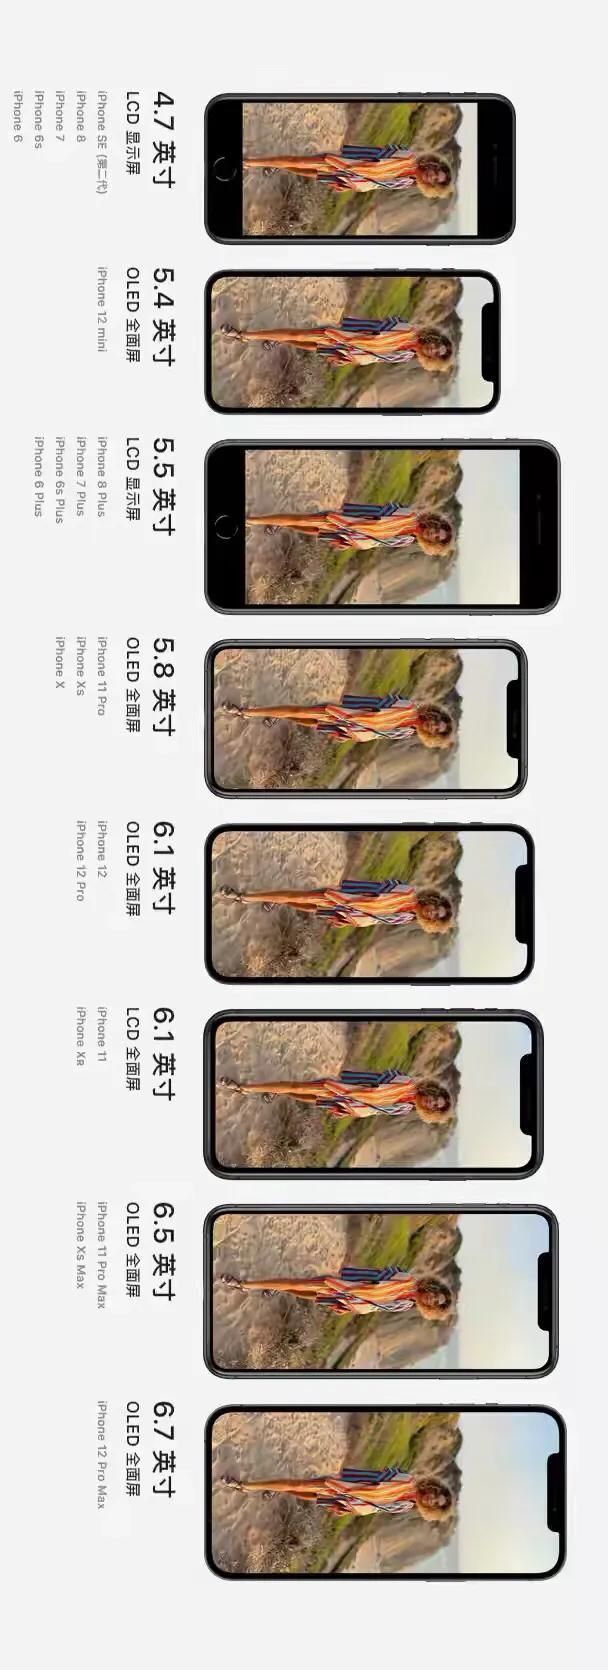 iphone屏幕尺寸大全对照表（苹果手机外形尺寸对比）